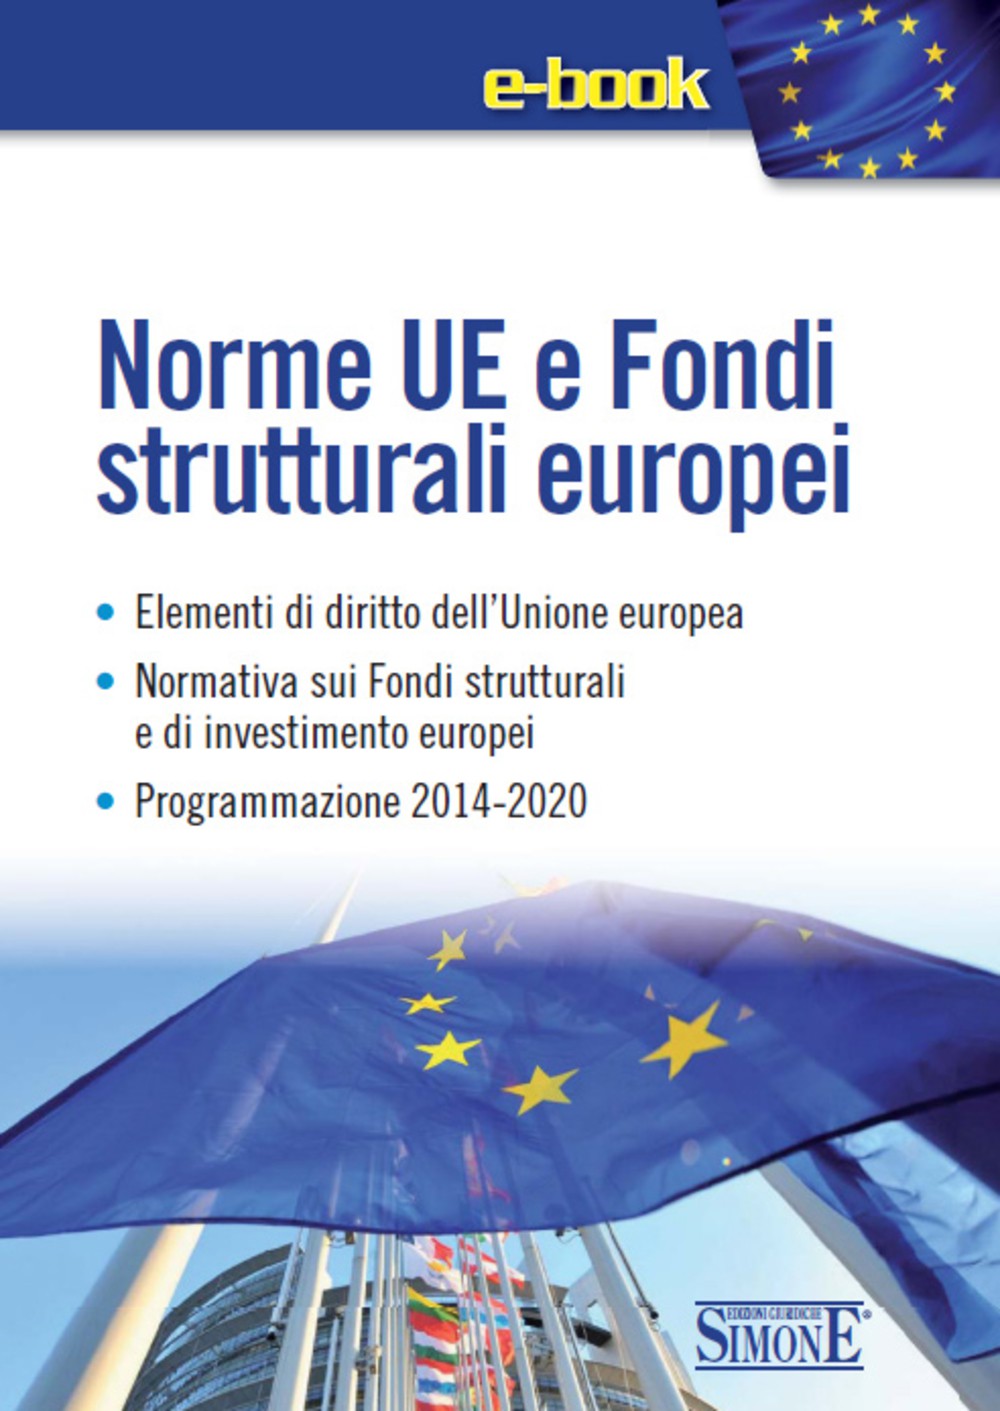 Norme UE e Fondi strutturali europei - Librerie.coop